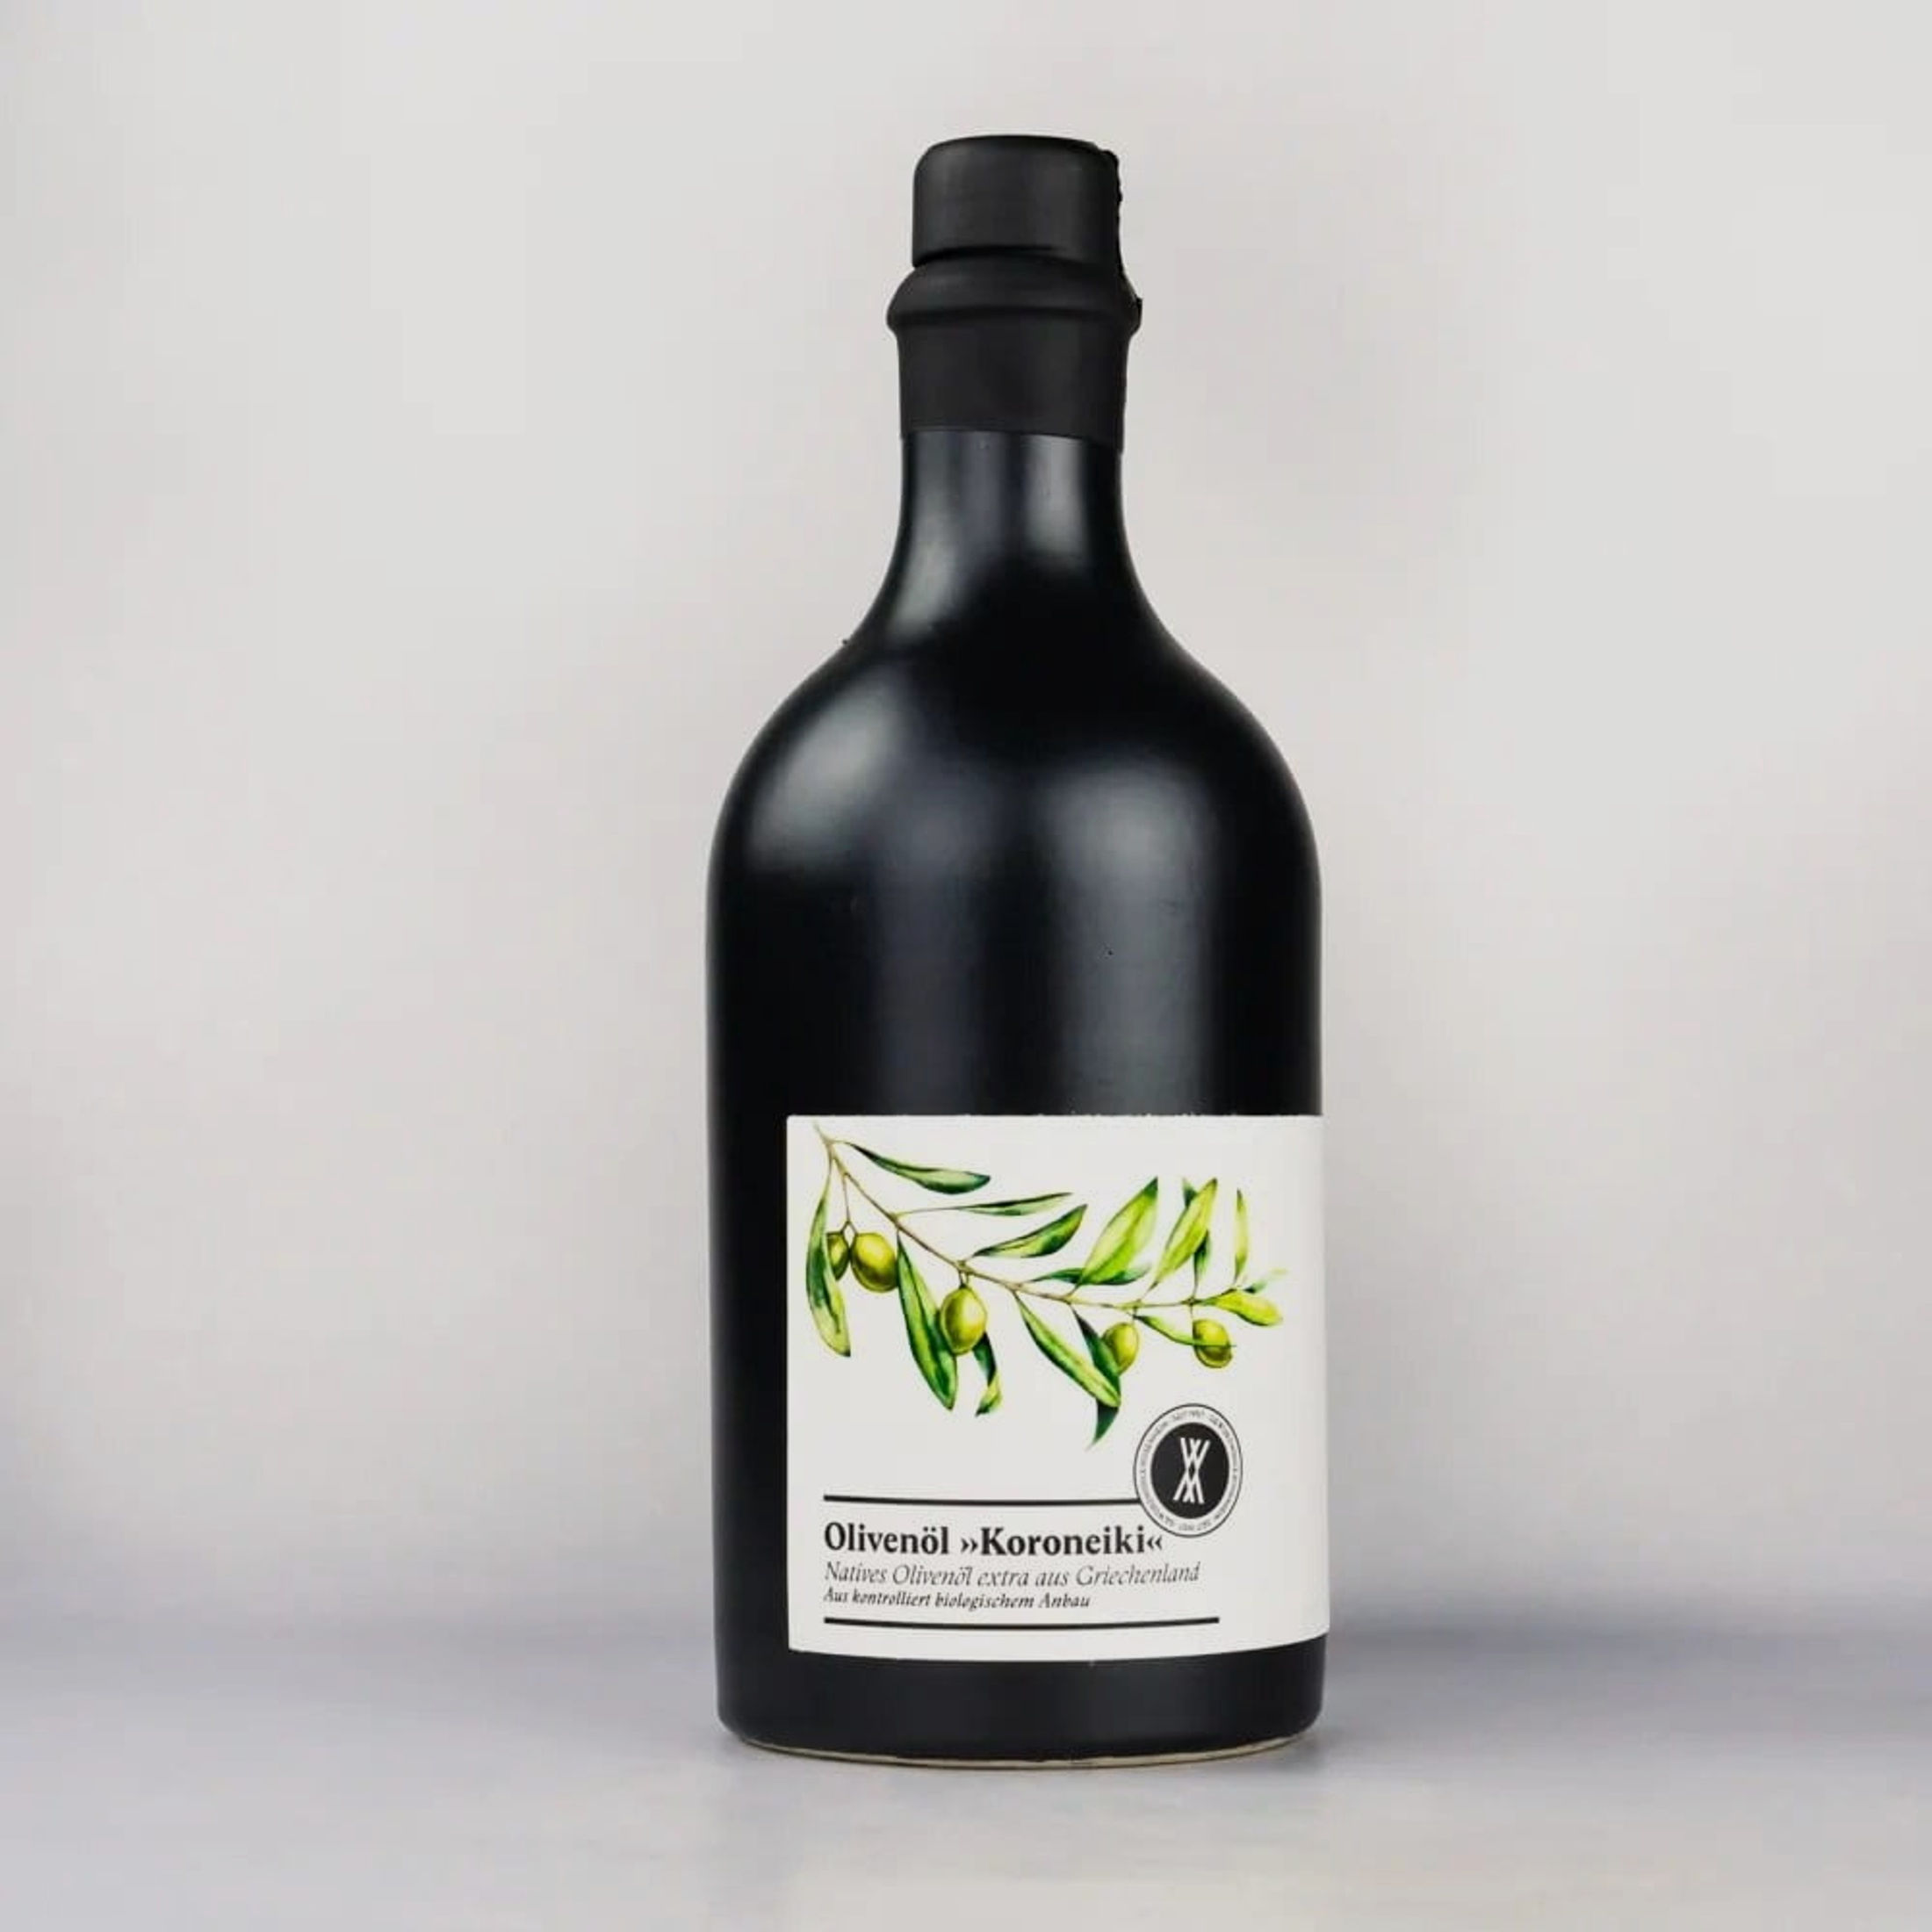 Gewürzmühle Rosenheim Natives Olivenöl Extra